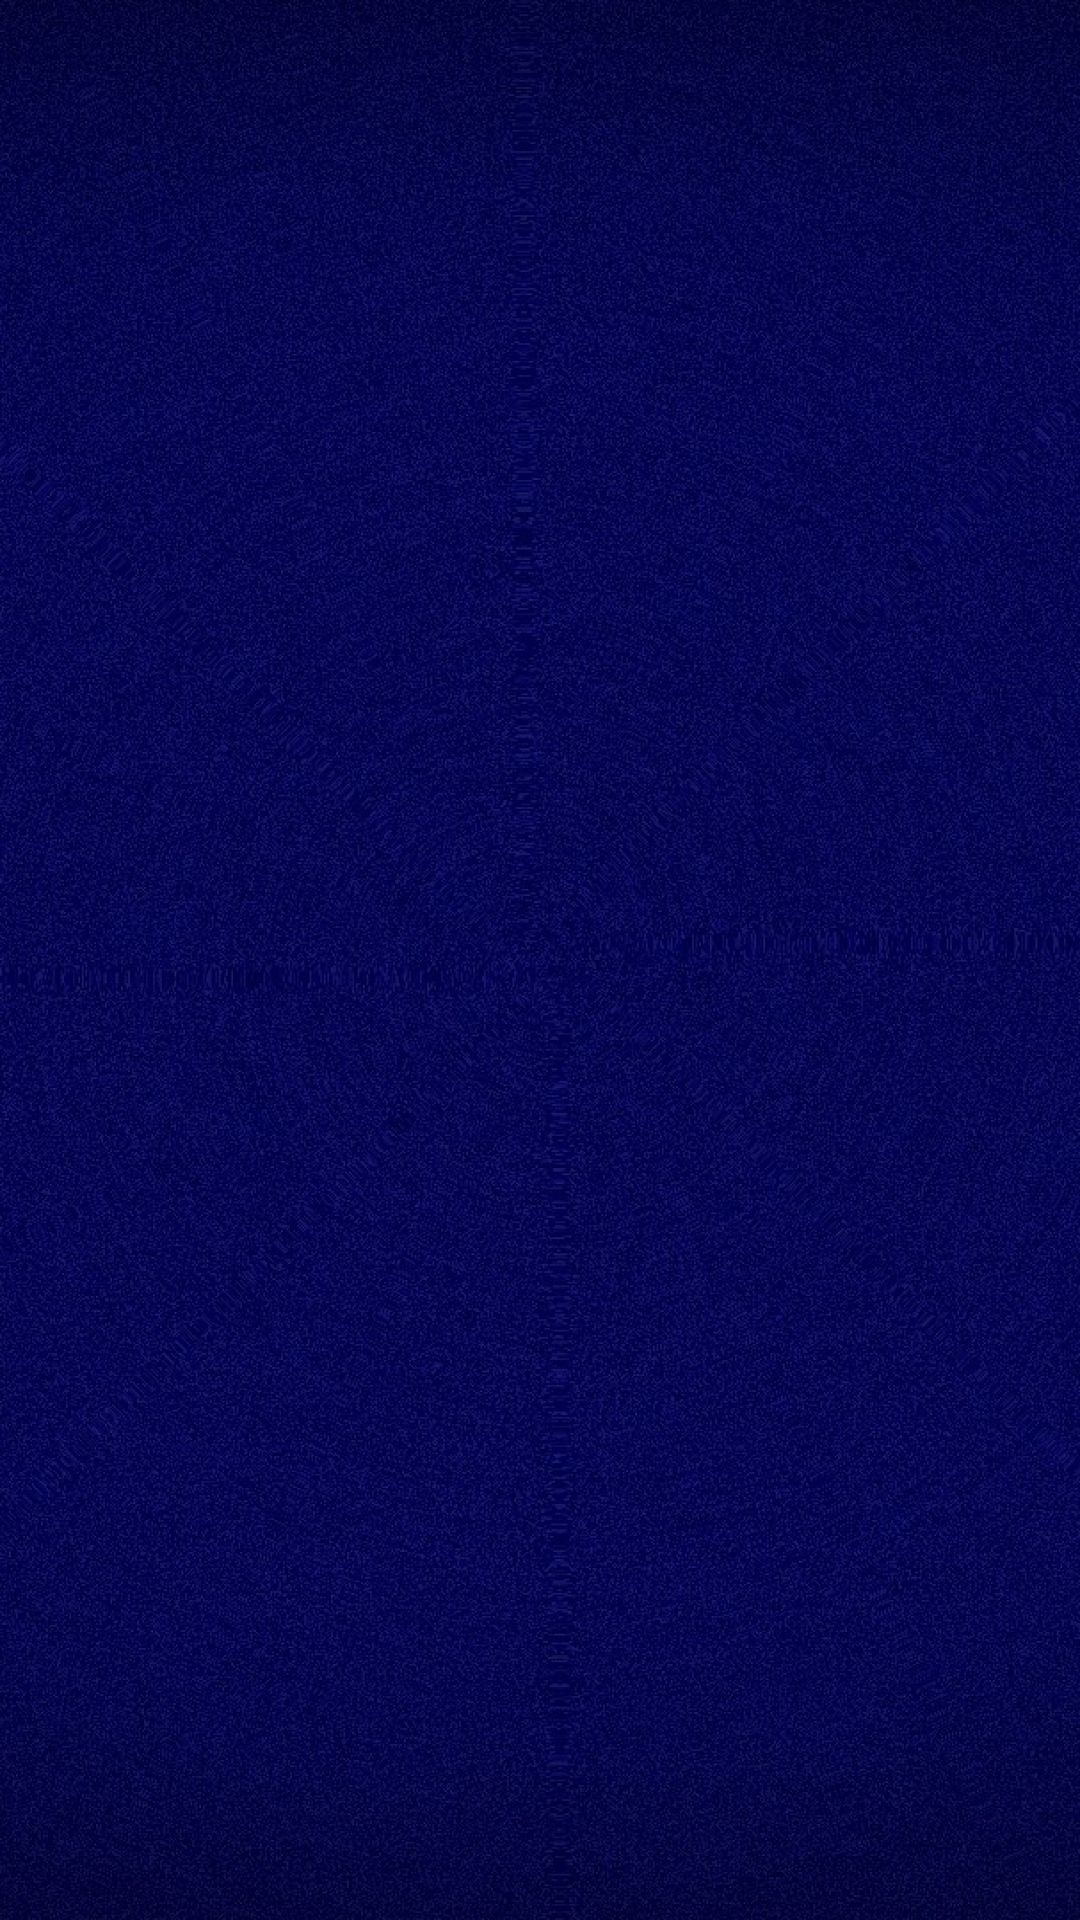 Dark Blue Wallpaper | www.wallpapertag.xyz - Best Selection of ...